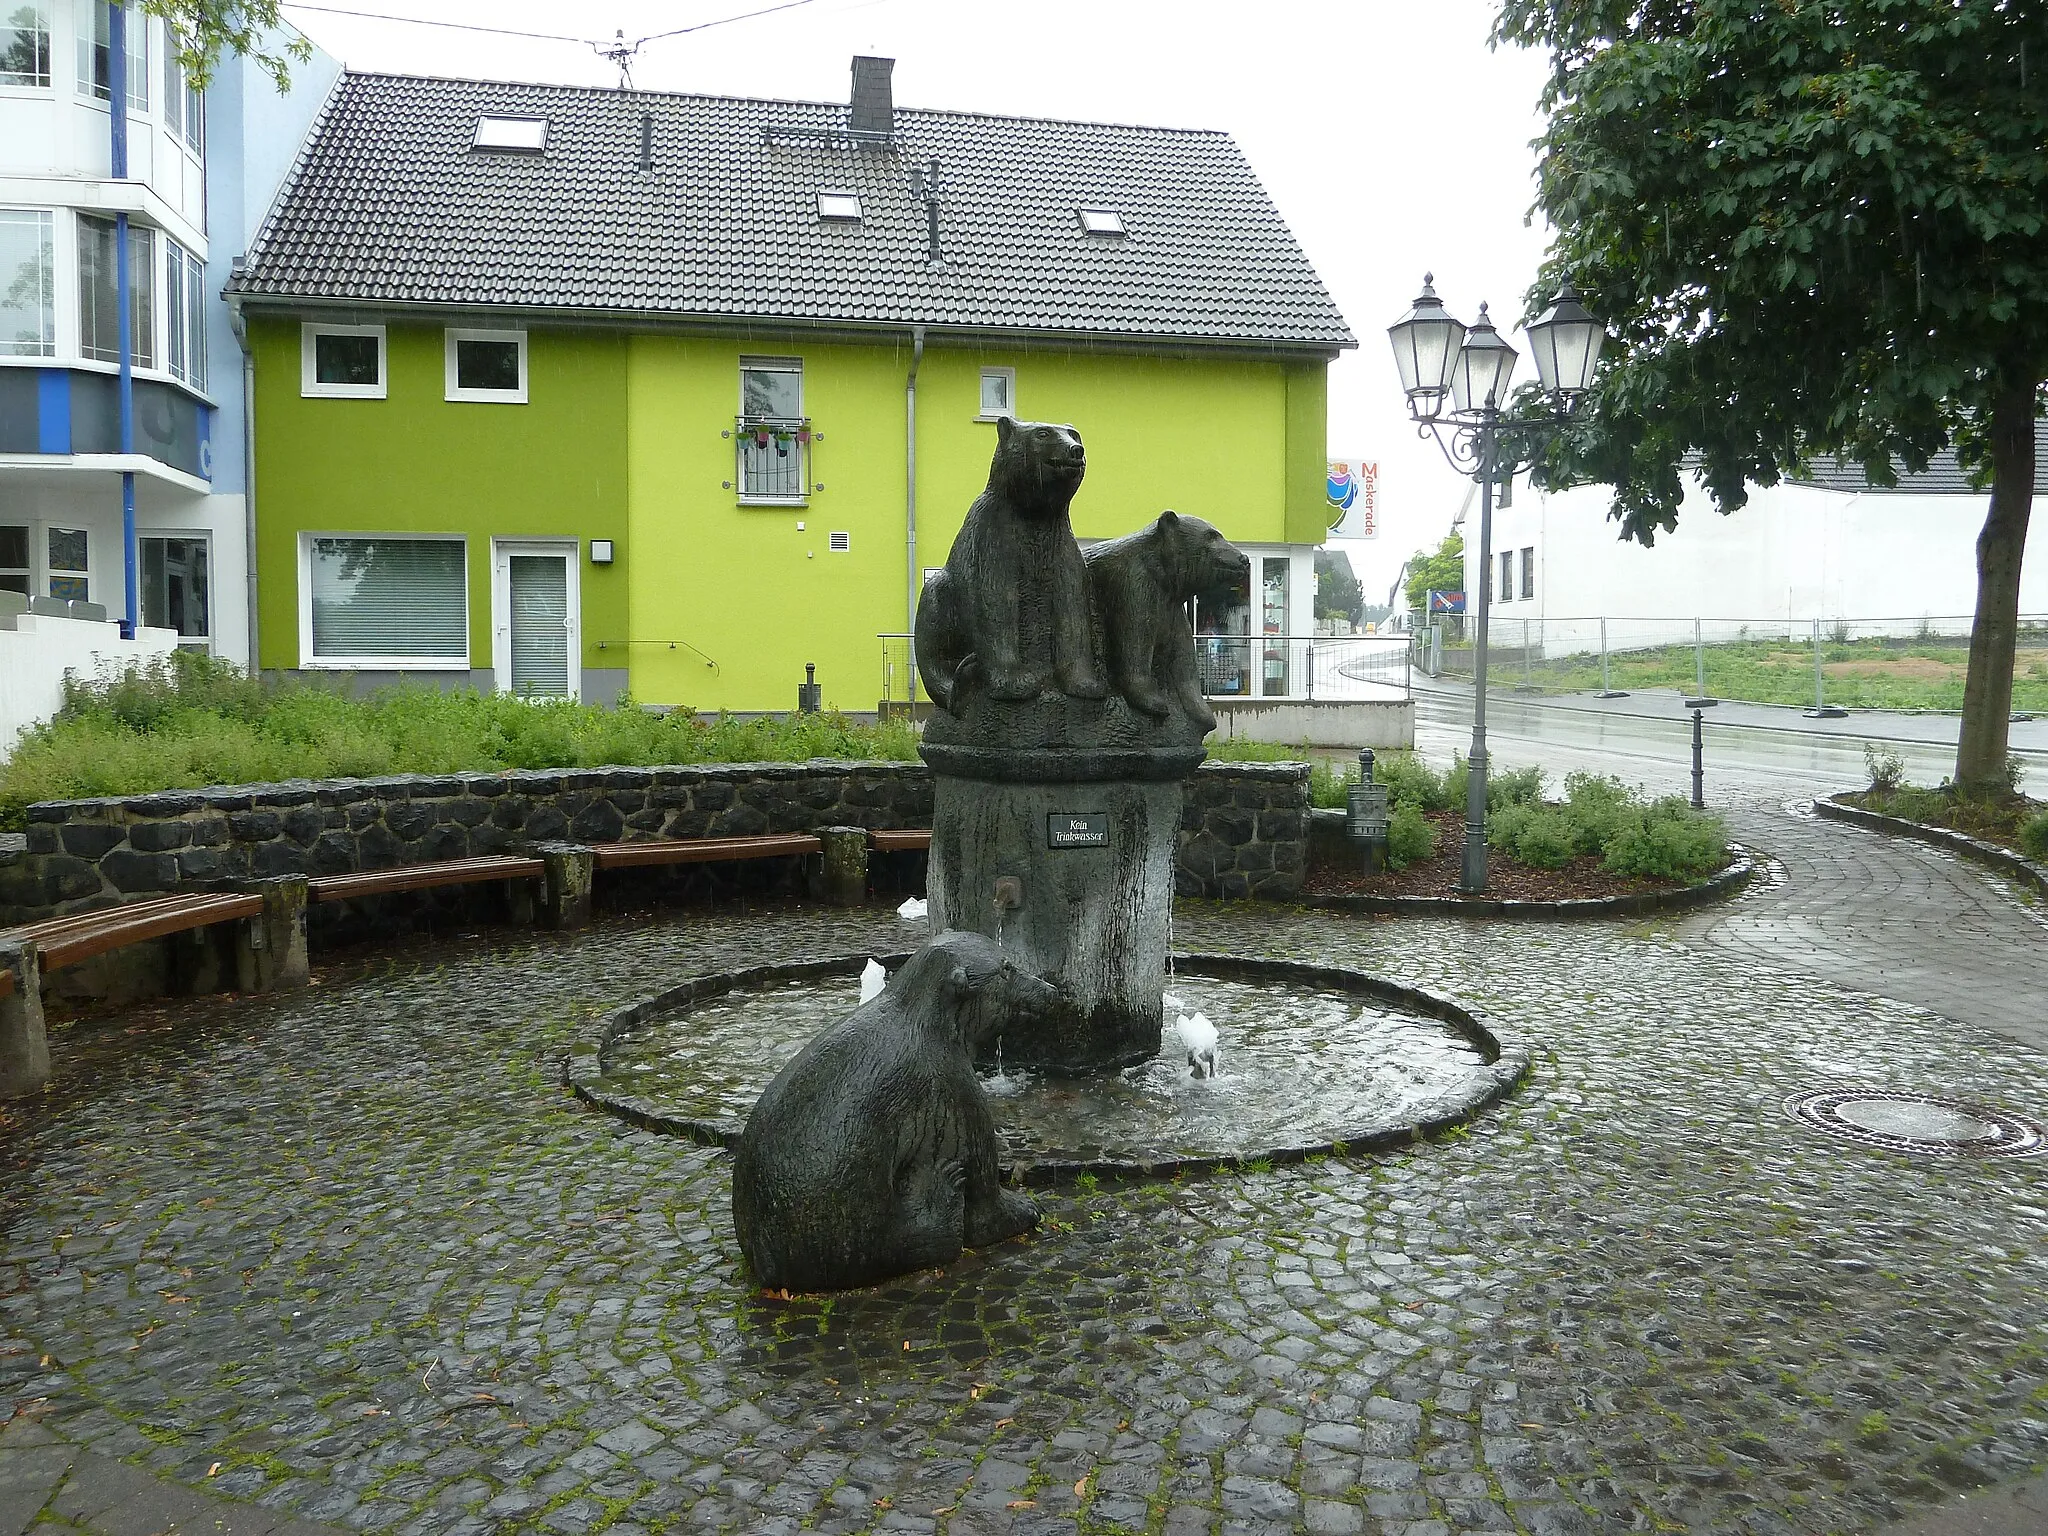 Photo showing: Bärenbrunnen, a fountain in the German village Hundsangen.